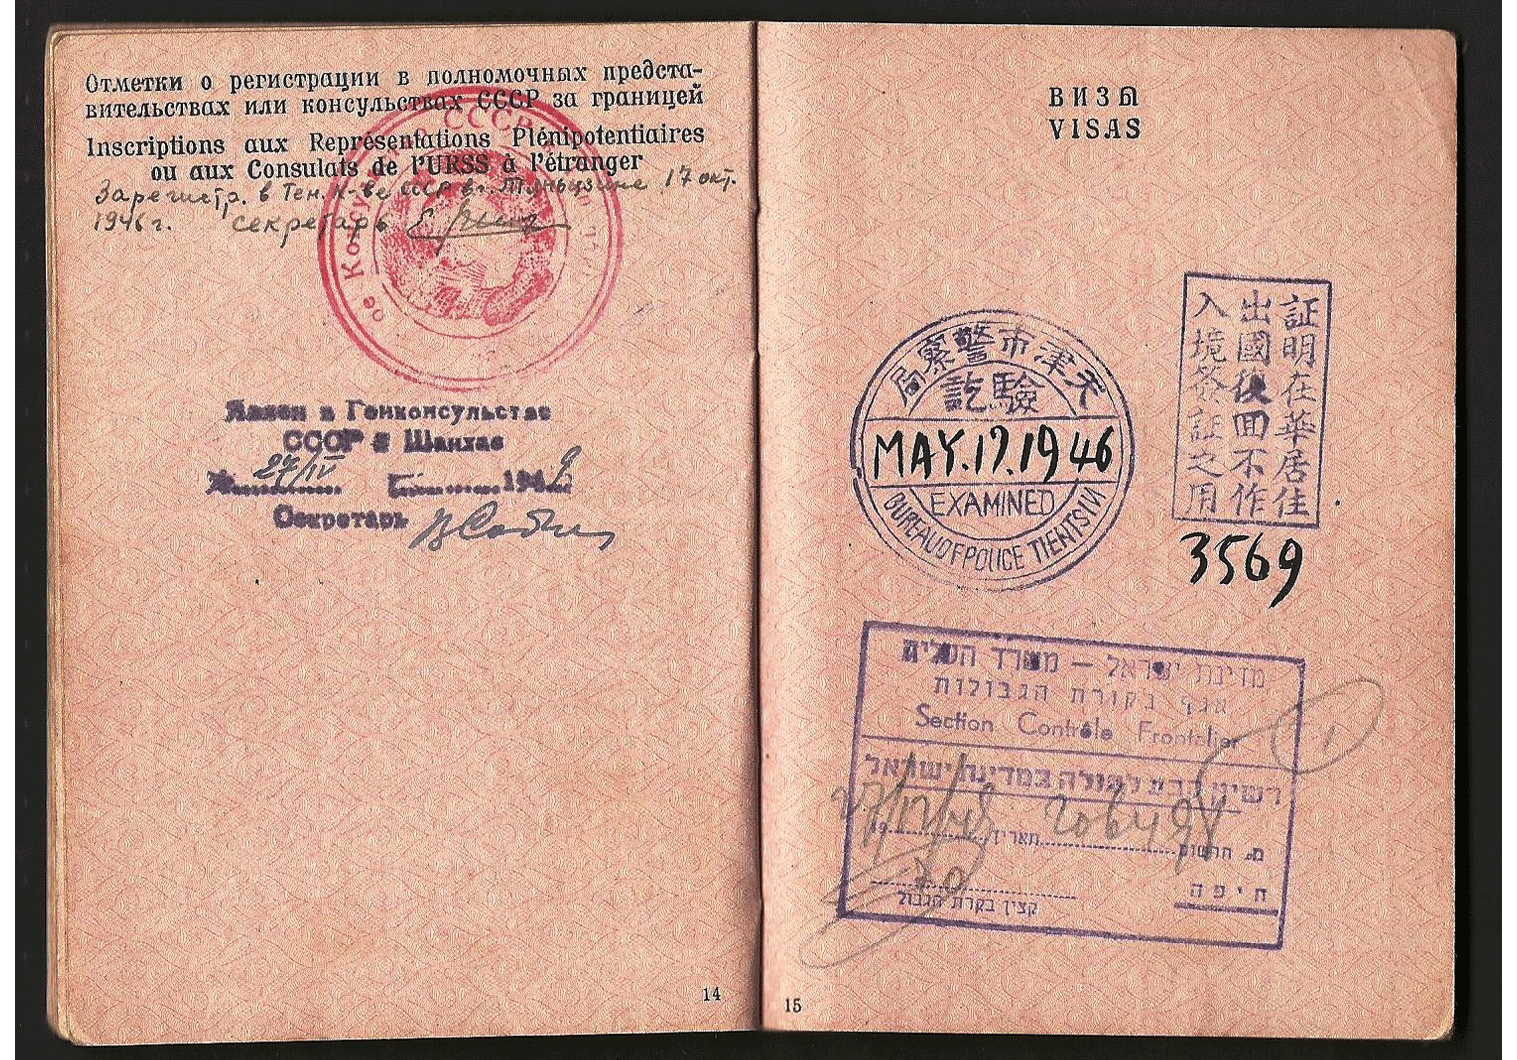 WW2 USSR passport